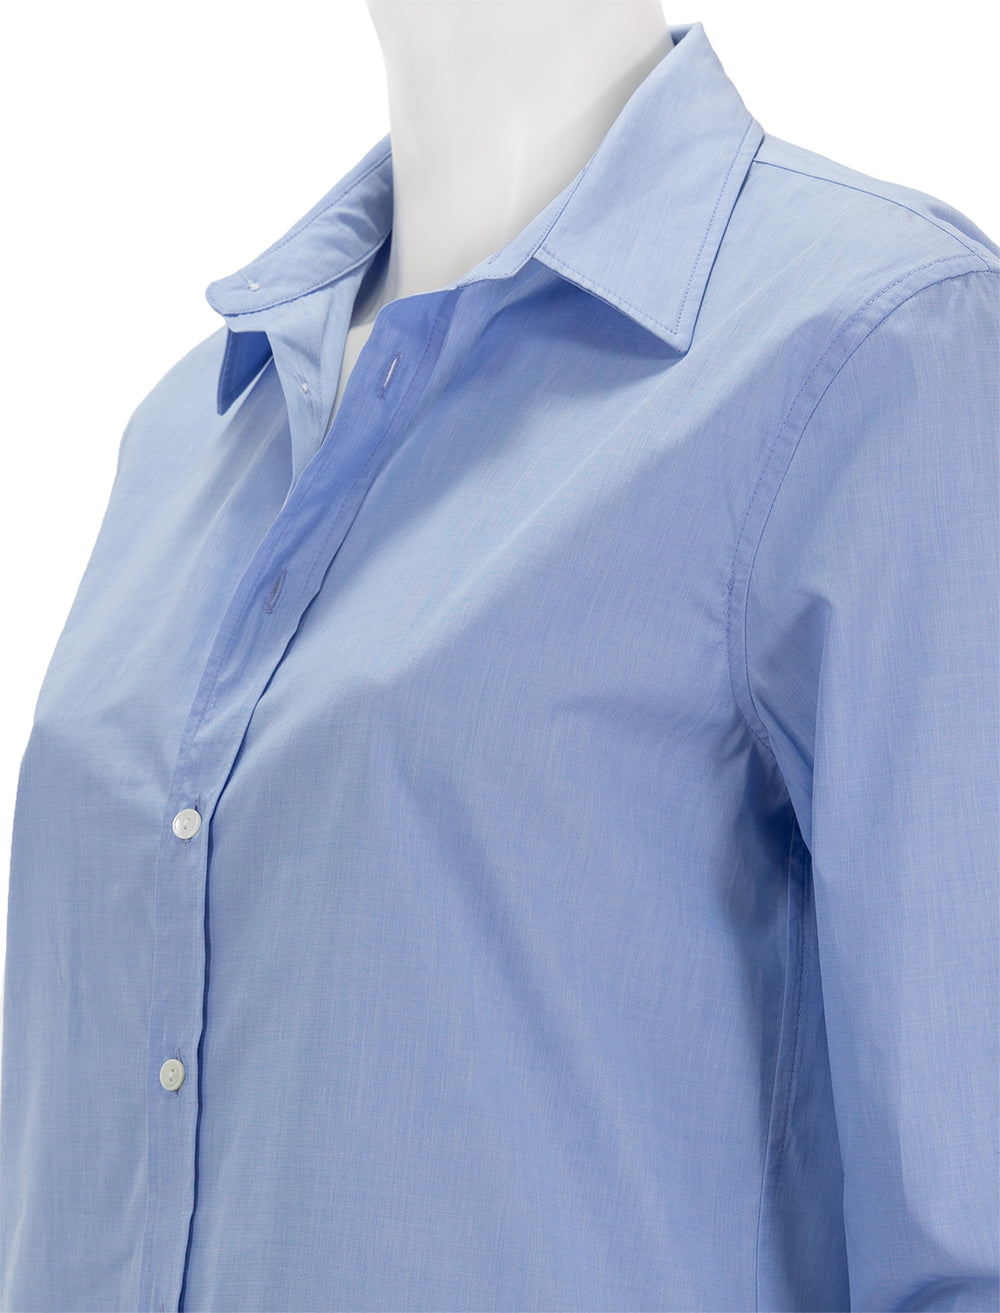 Close-up view of Nili Lotan's raphael classic shirt in light blue.